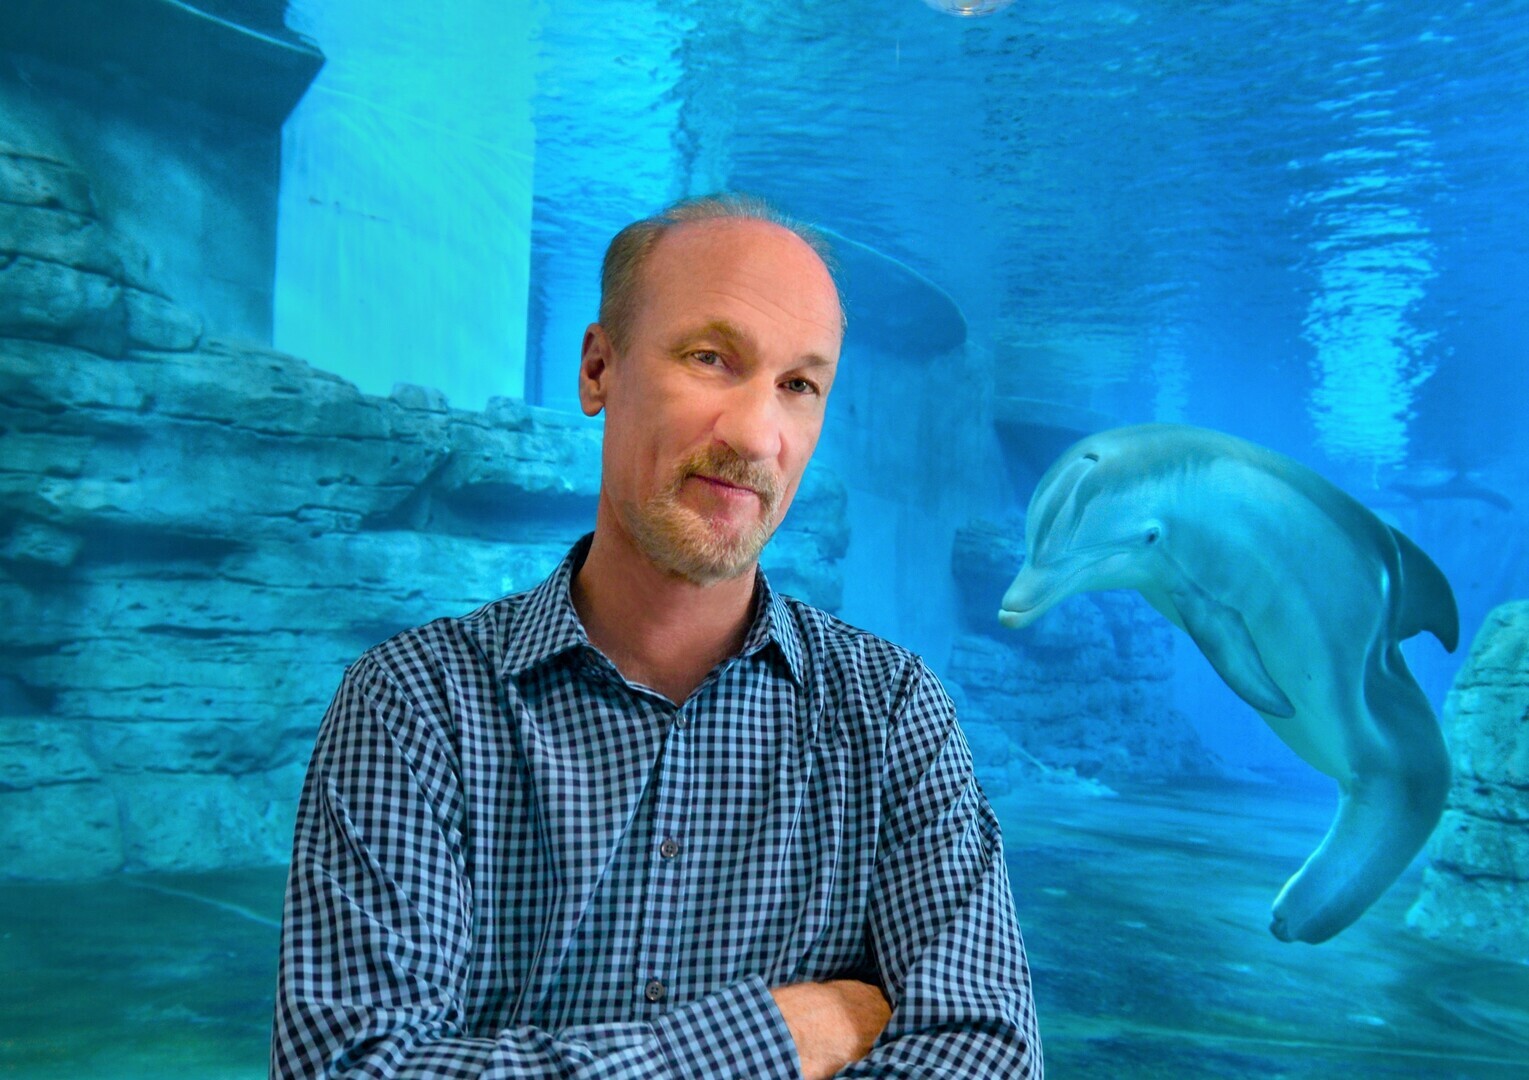 Person of Vision Dinner, Honoring David Yates, Celebrating Clearwater Marine Aquarium, Clearwater, Florida, United States